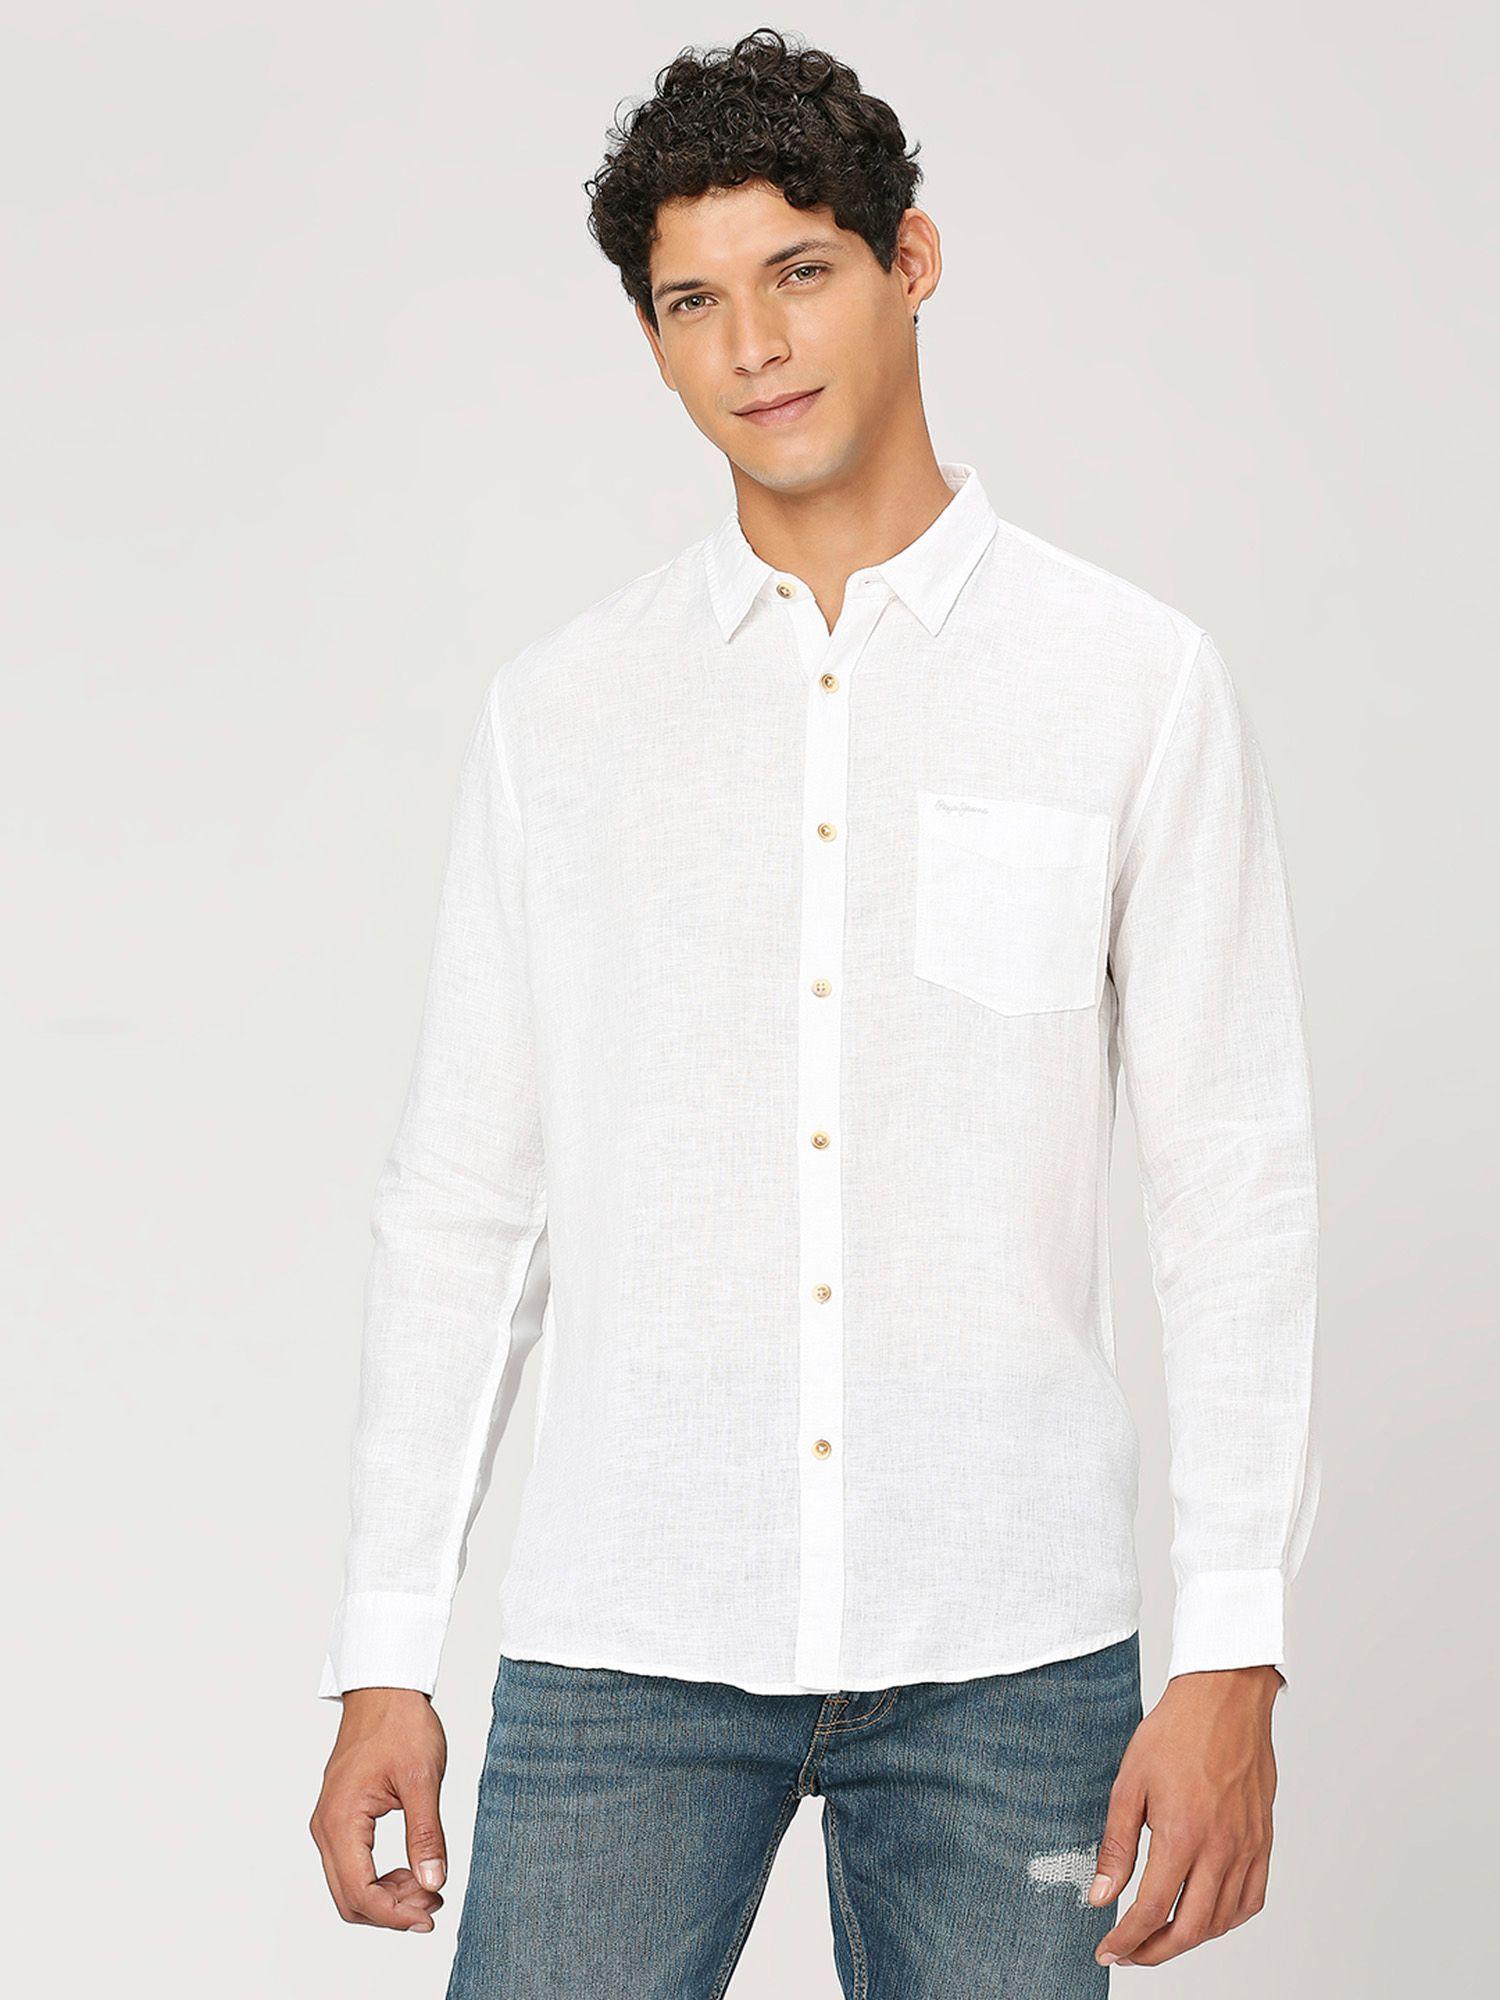 White Patch Pocket Full Sleeves Shirt